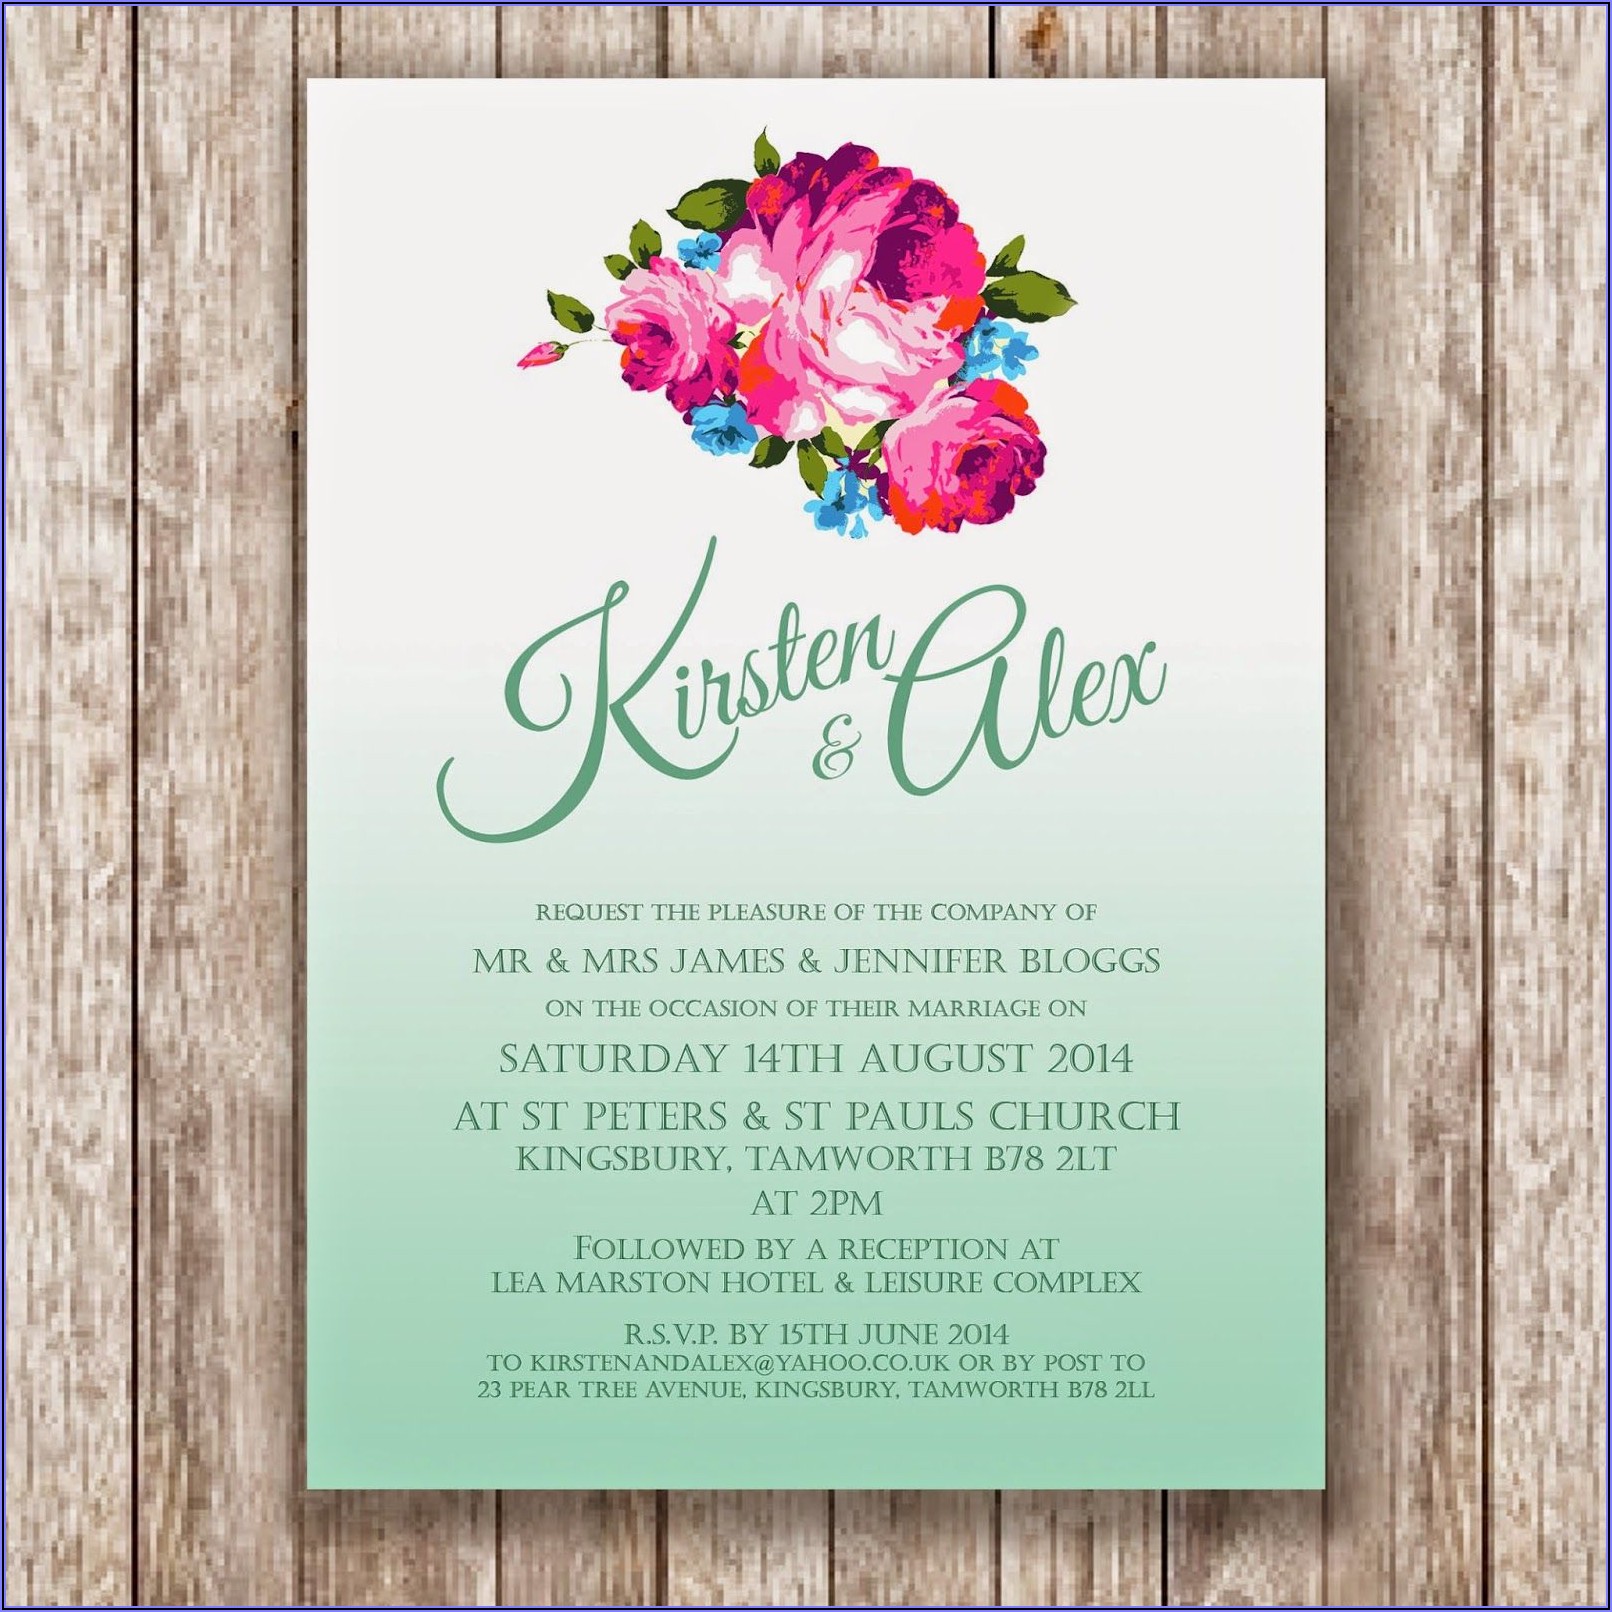 Digital Wedding Invitation Card Design